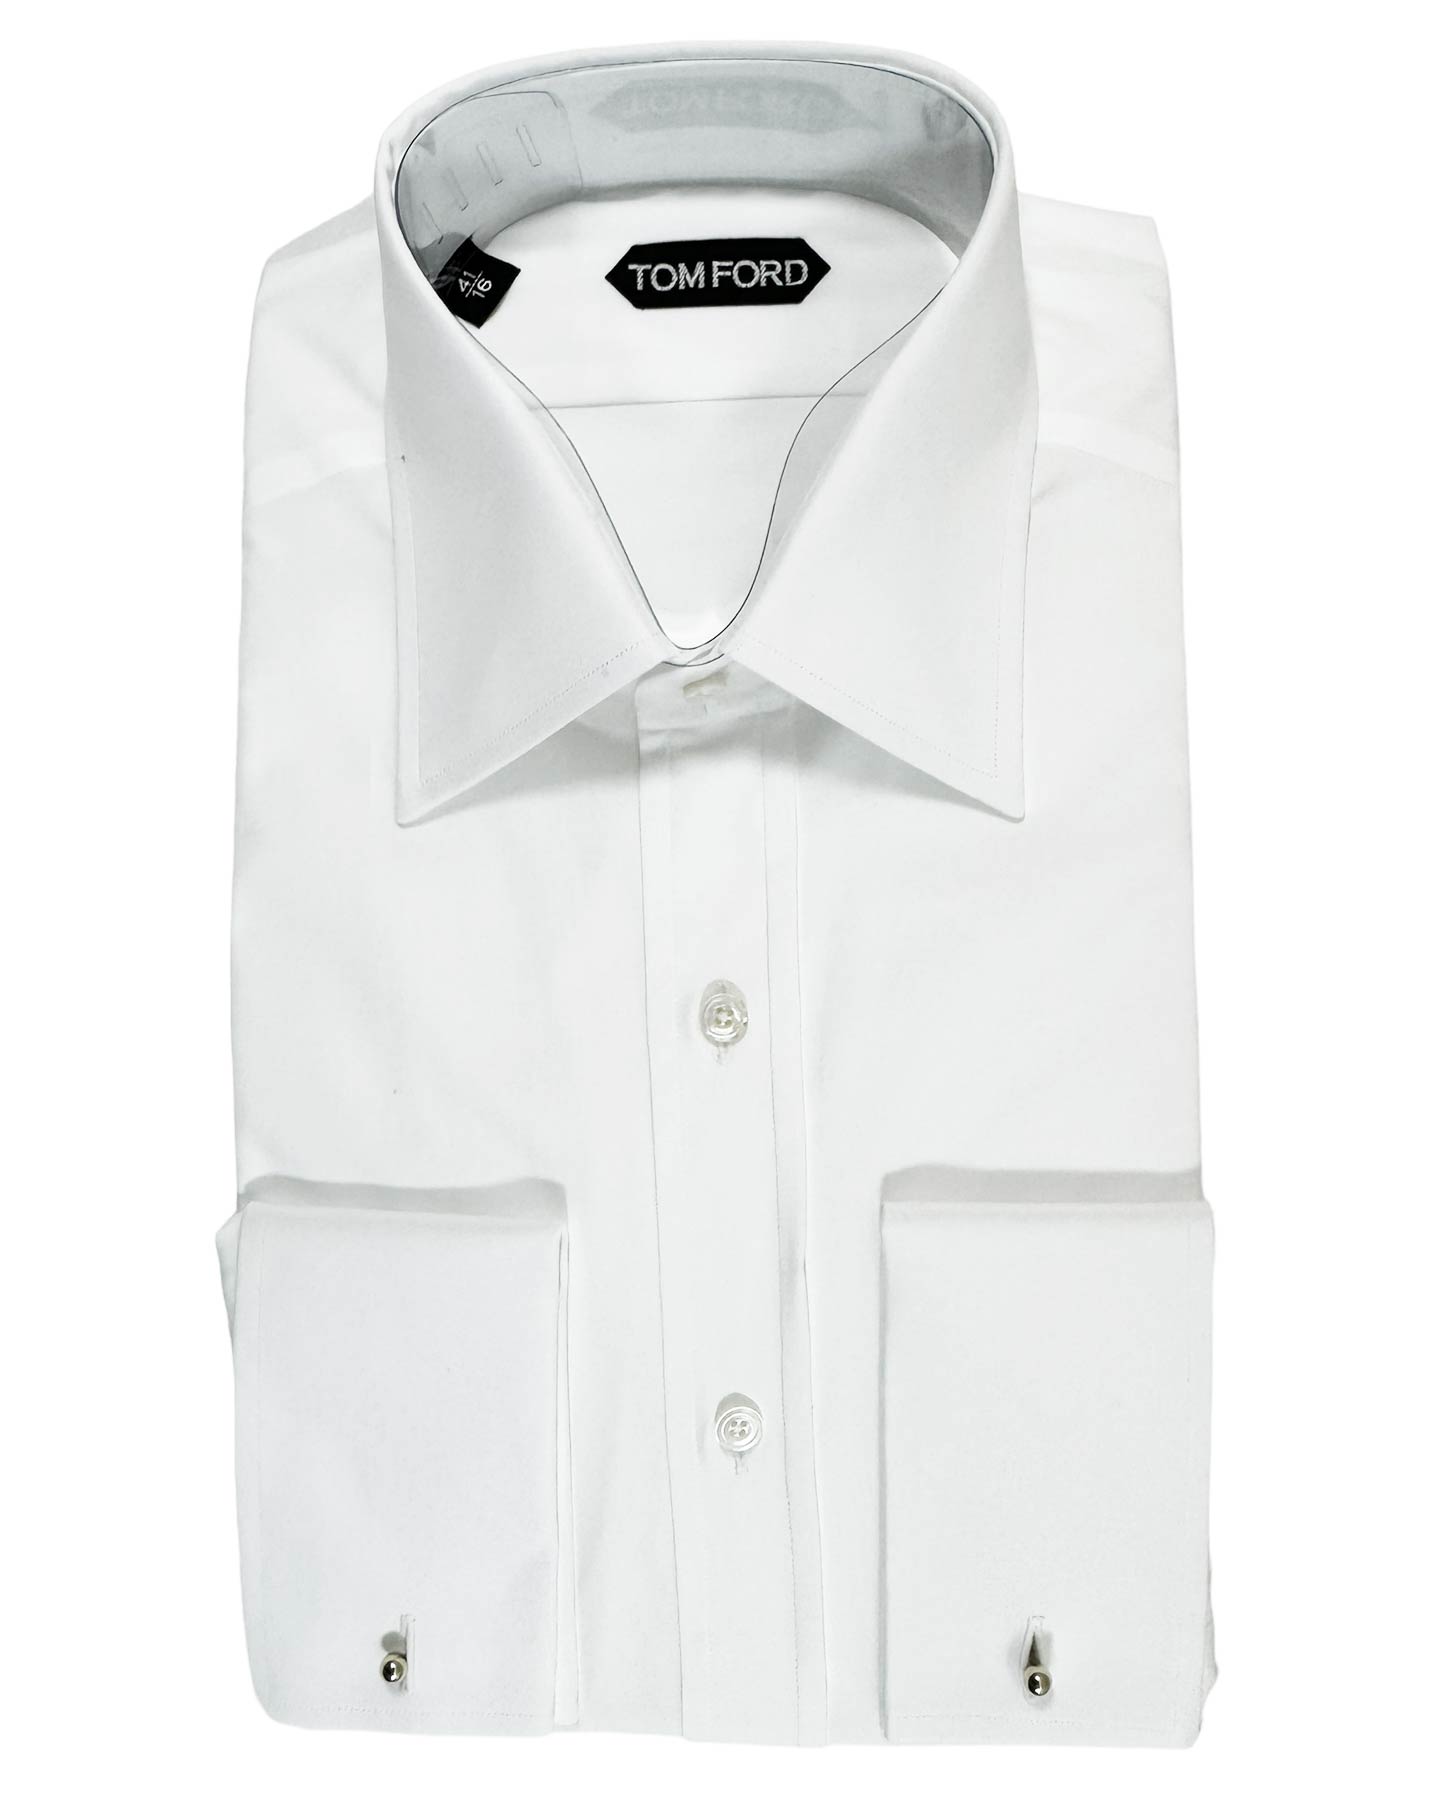 Tom Ford Shirt White French Cuffs 